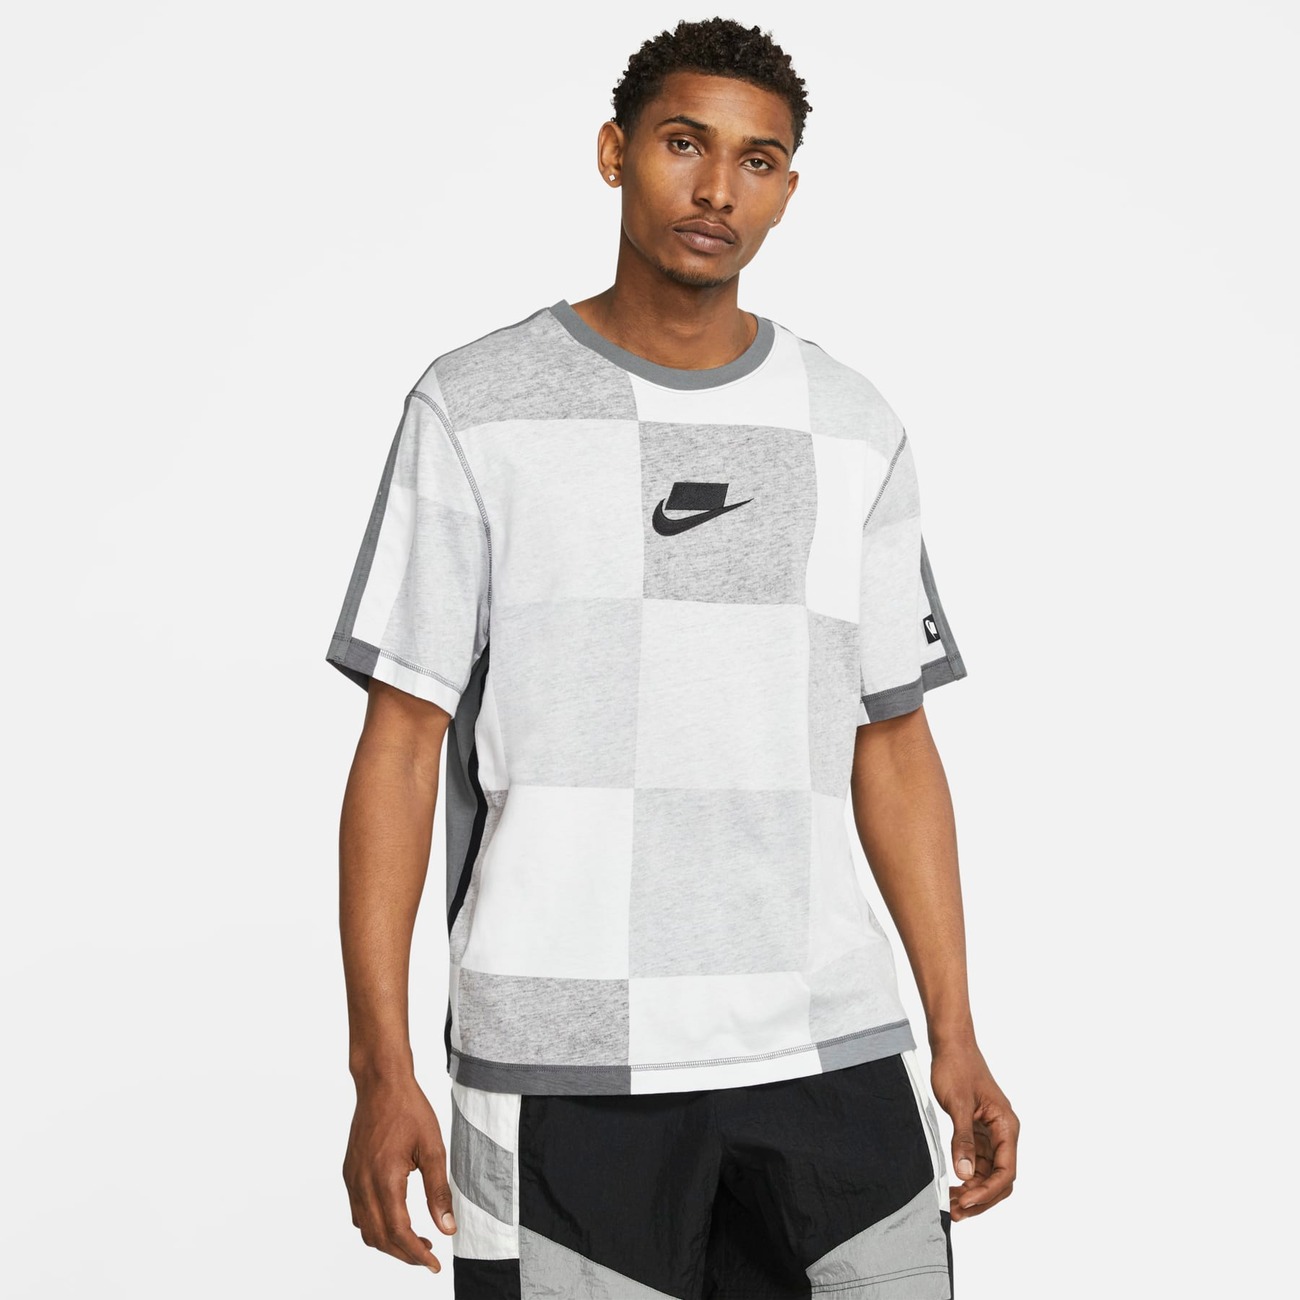 factible becerro Meandro Camiseta Nike Sportswear NSW Masculina - Nike